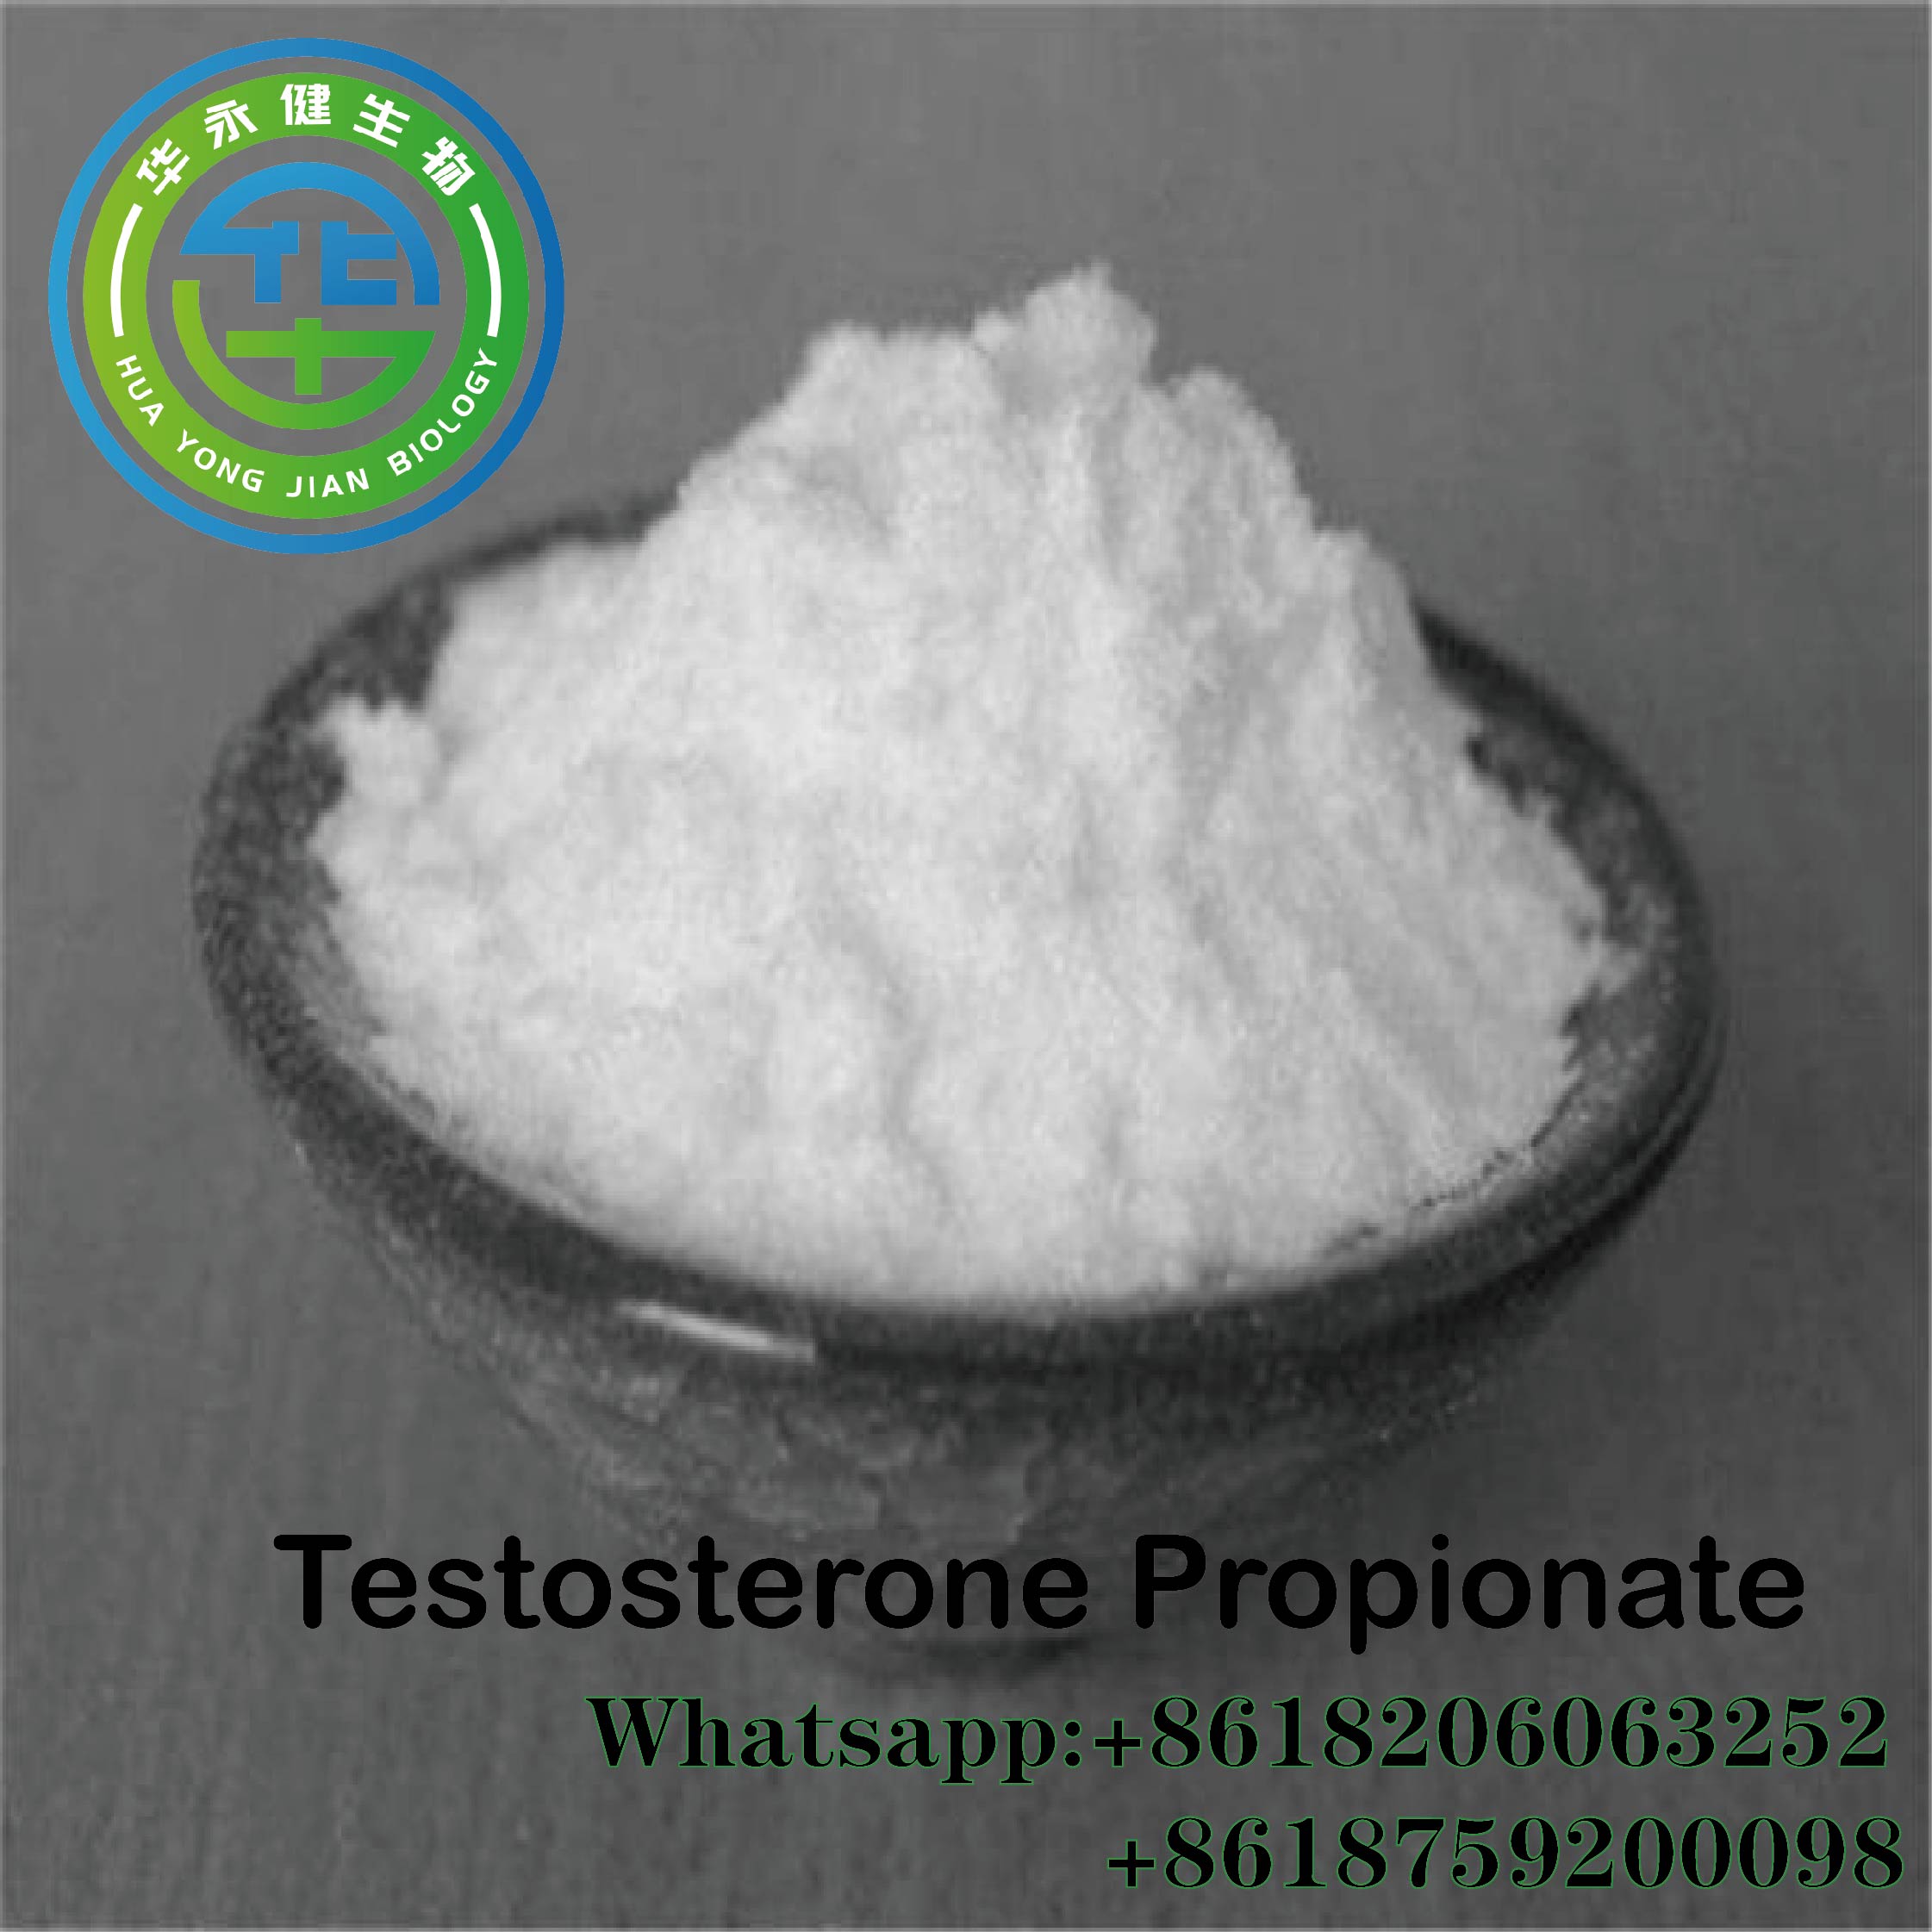 High Purity Test Prop Injectable Liquid Powder Anabolic Steroids Testosterone Propionate Blend Bodybuilding Powder CAS 57-85-2